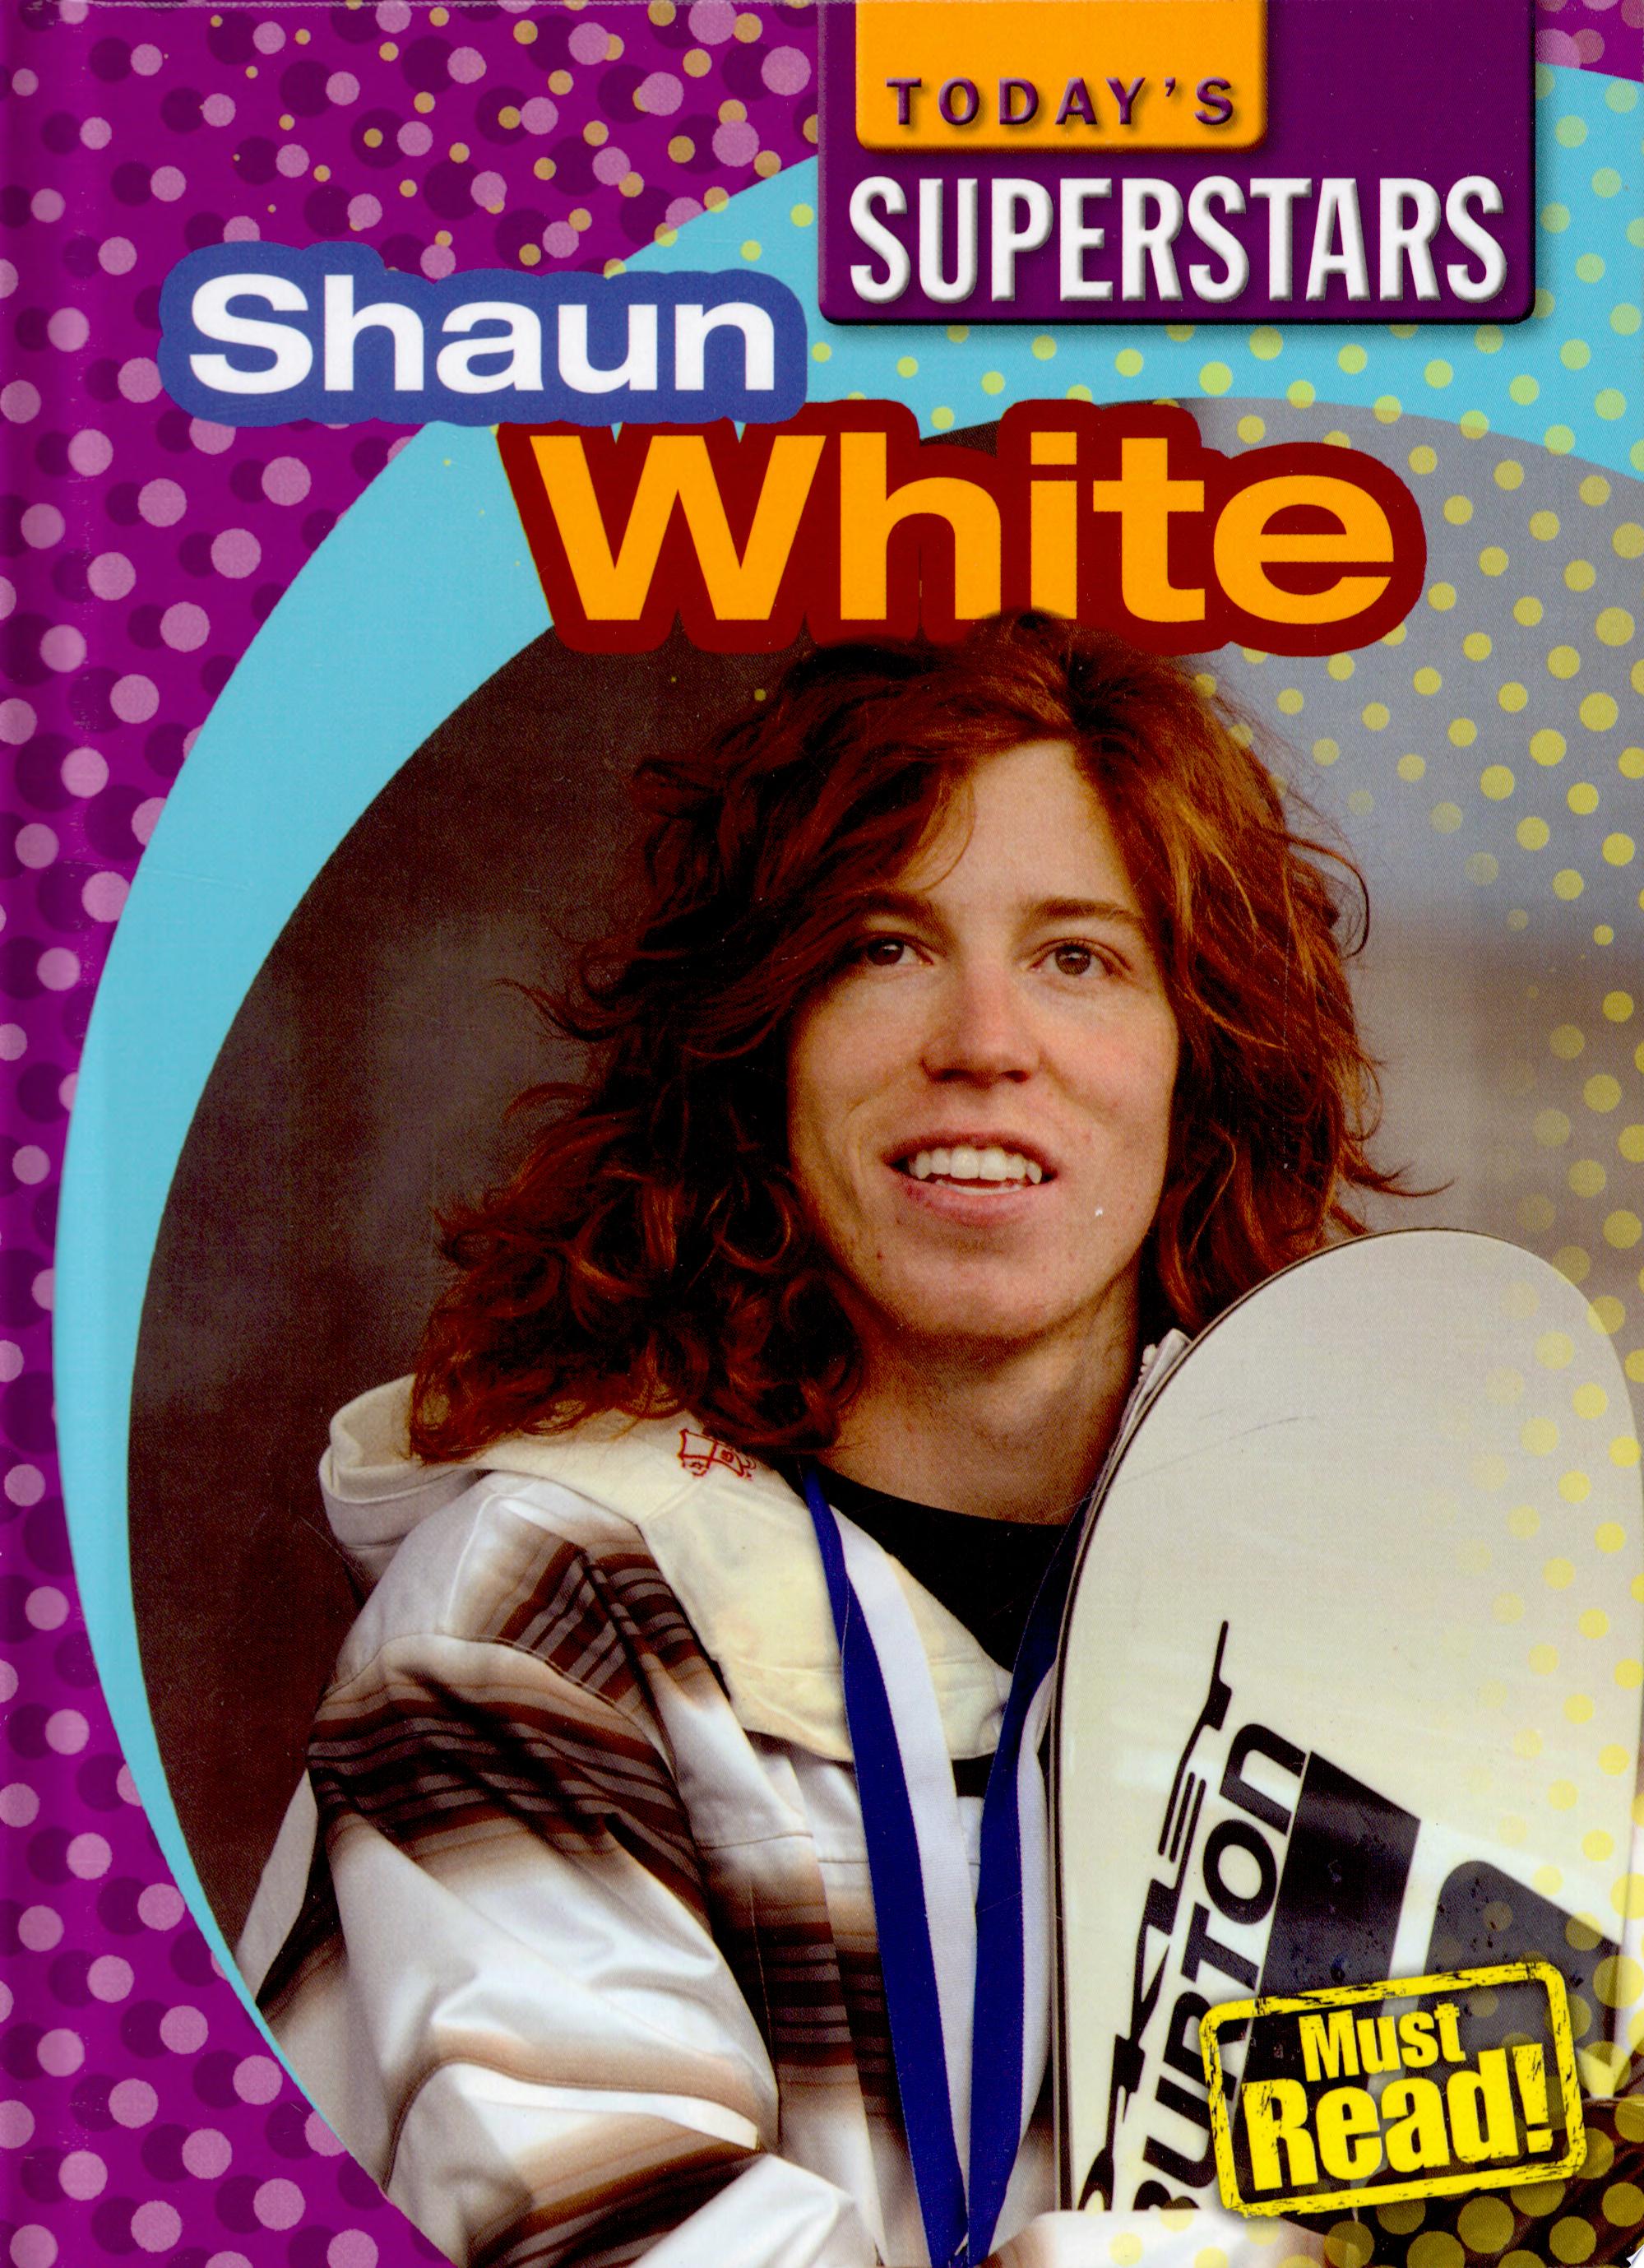 Image for "Shaun White"